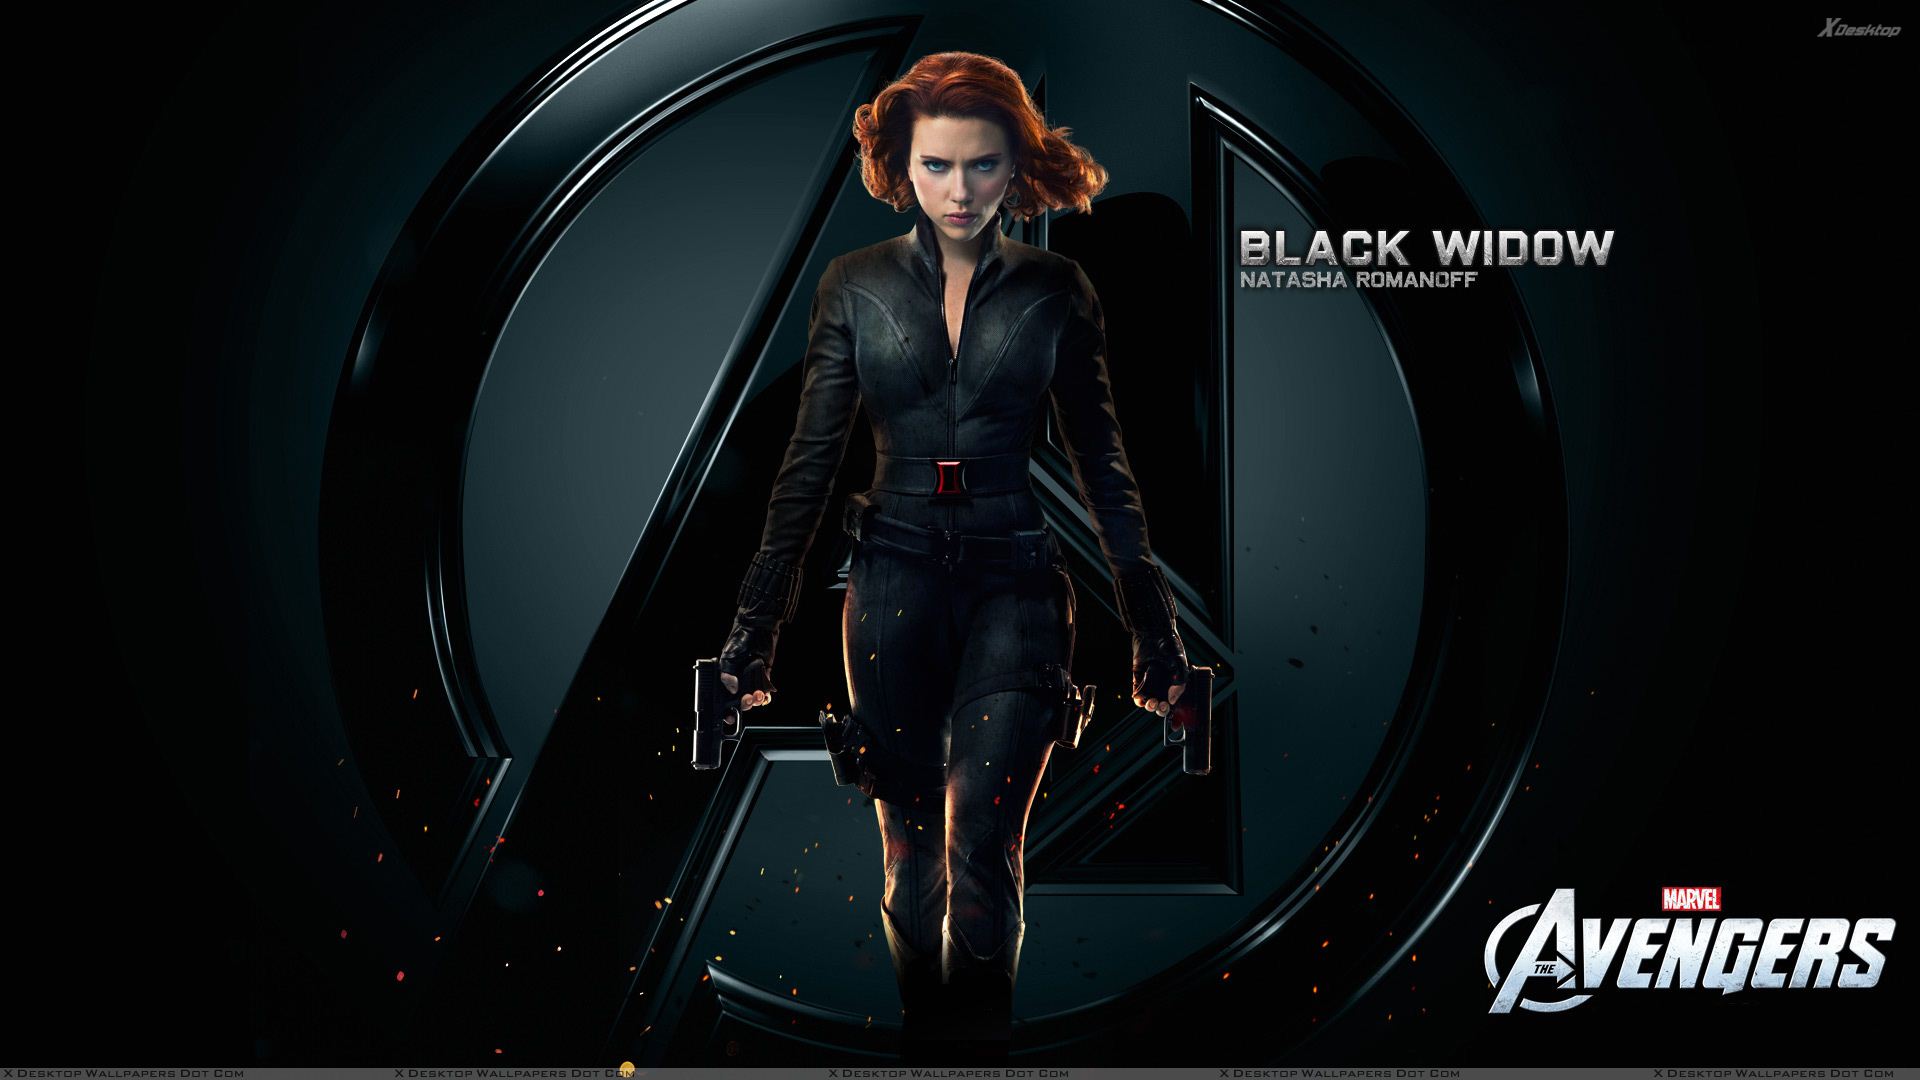 The Avengers Scarlett Johansson Black Widow Wallpaper 1920x1080